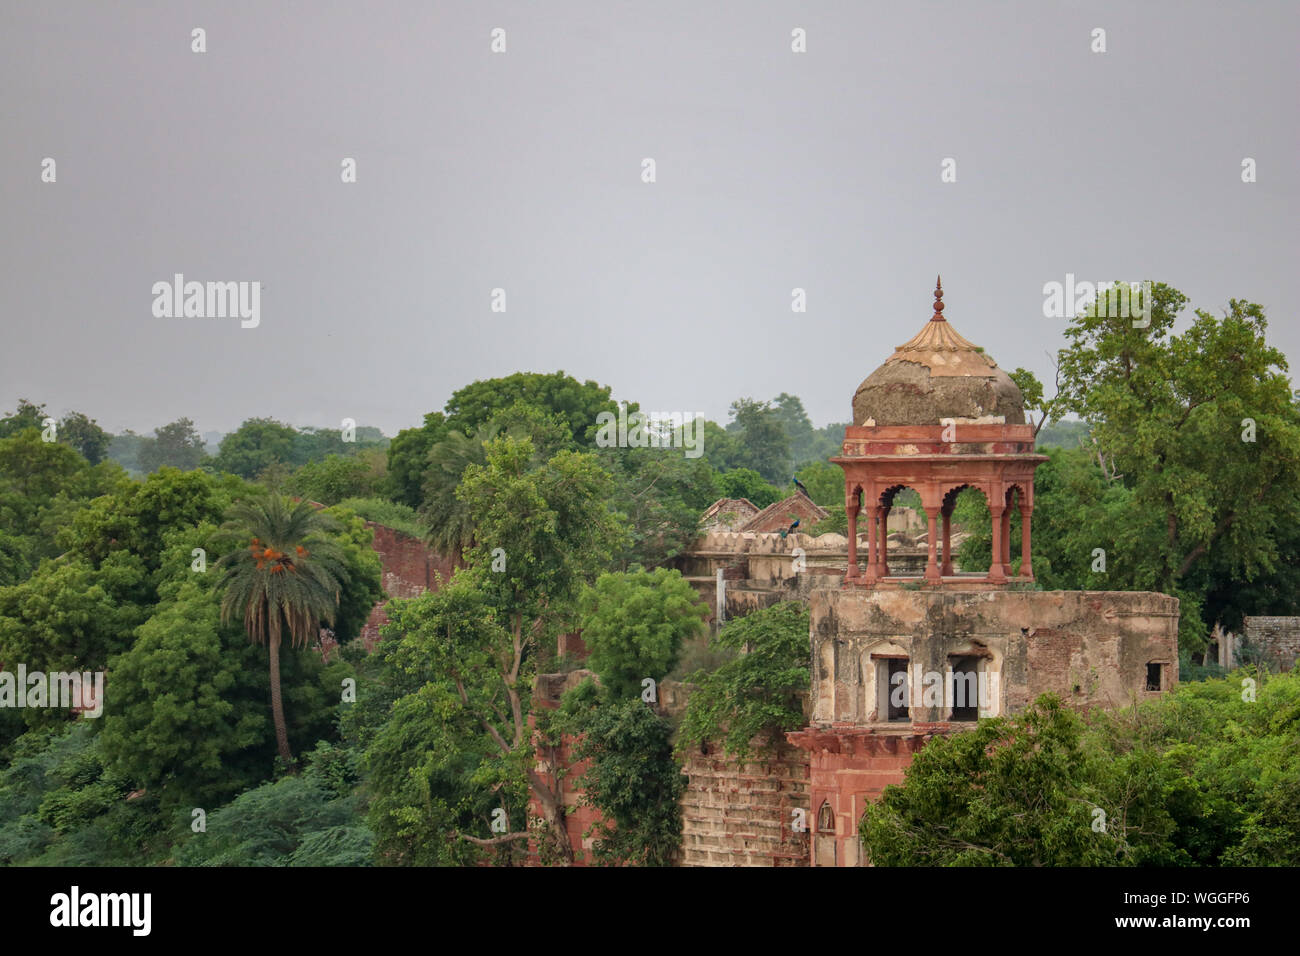 Ruins on the banks of the Yamuna River near the Taj Mahal, Agra, Uttar Pradesh, India Stock Photo